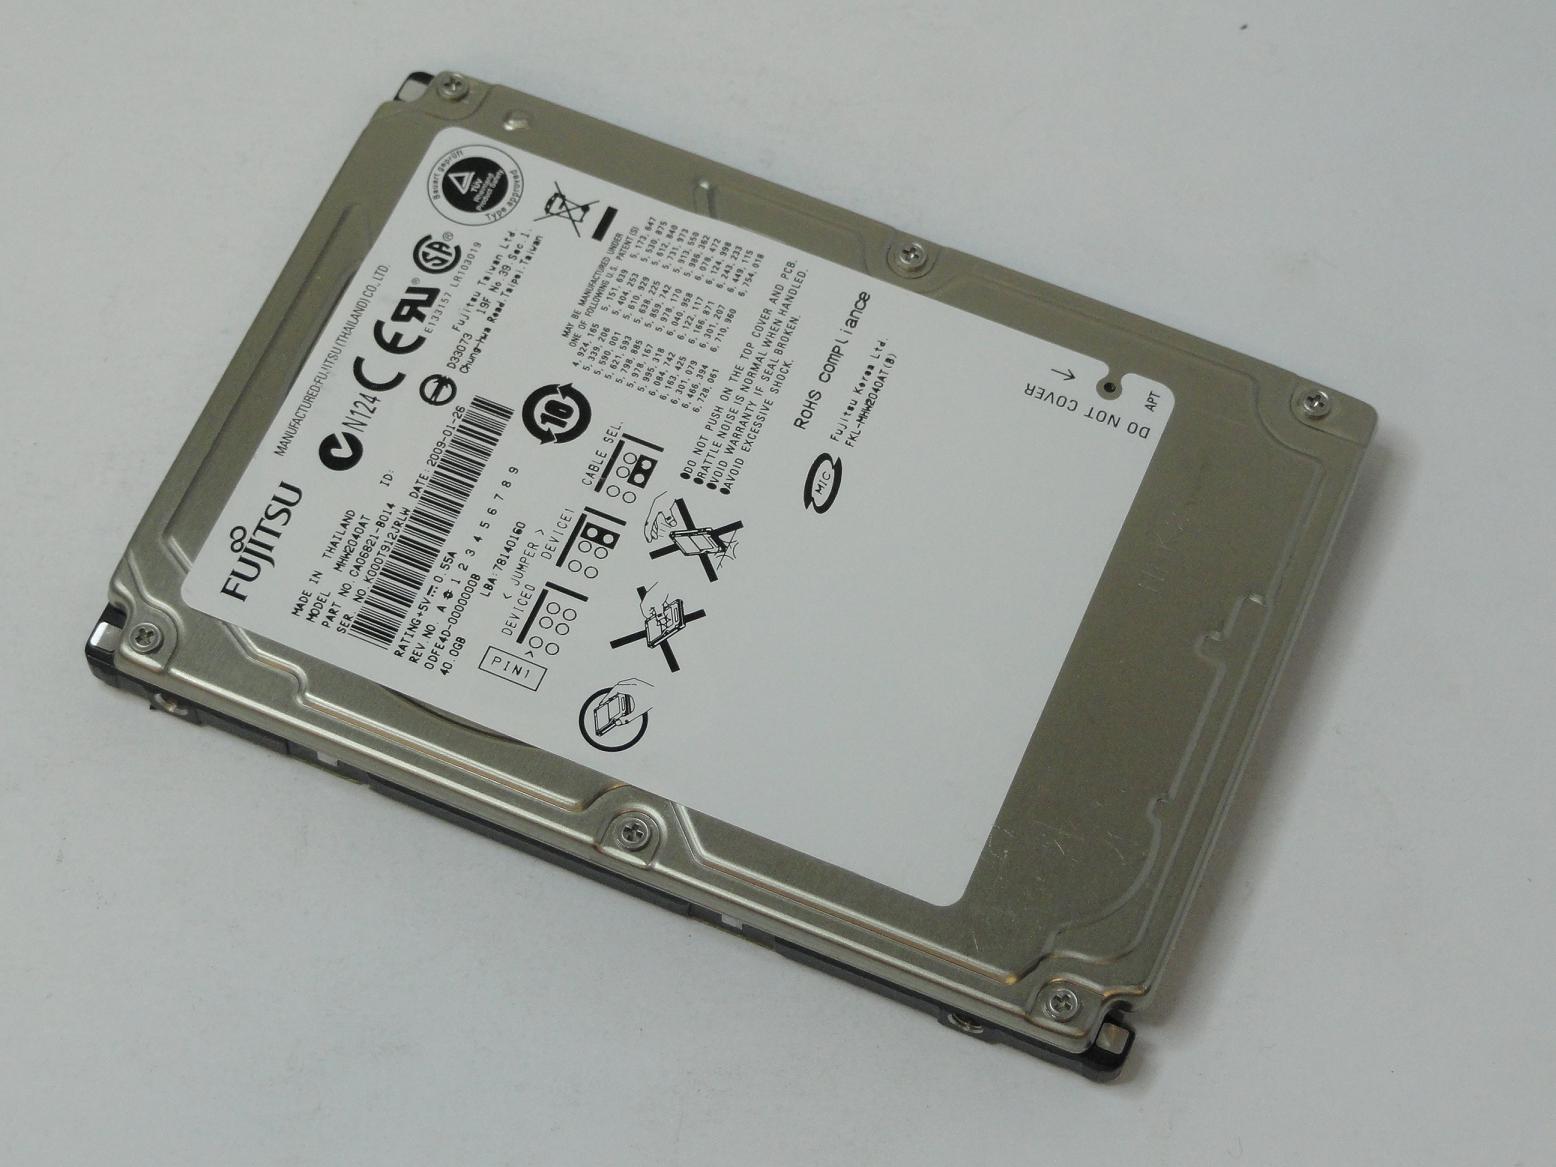 CA06821-B014 - Fujitsu 40GB IDE 4200rpm 2.5in HDD - Refurbished